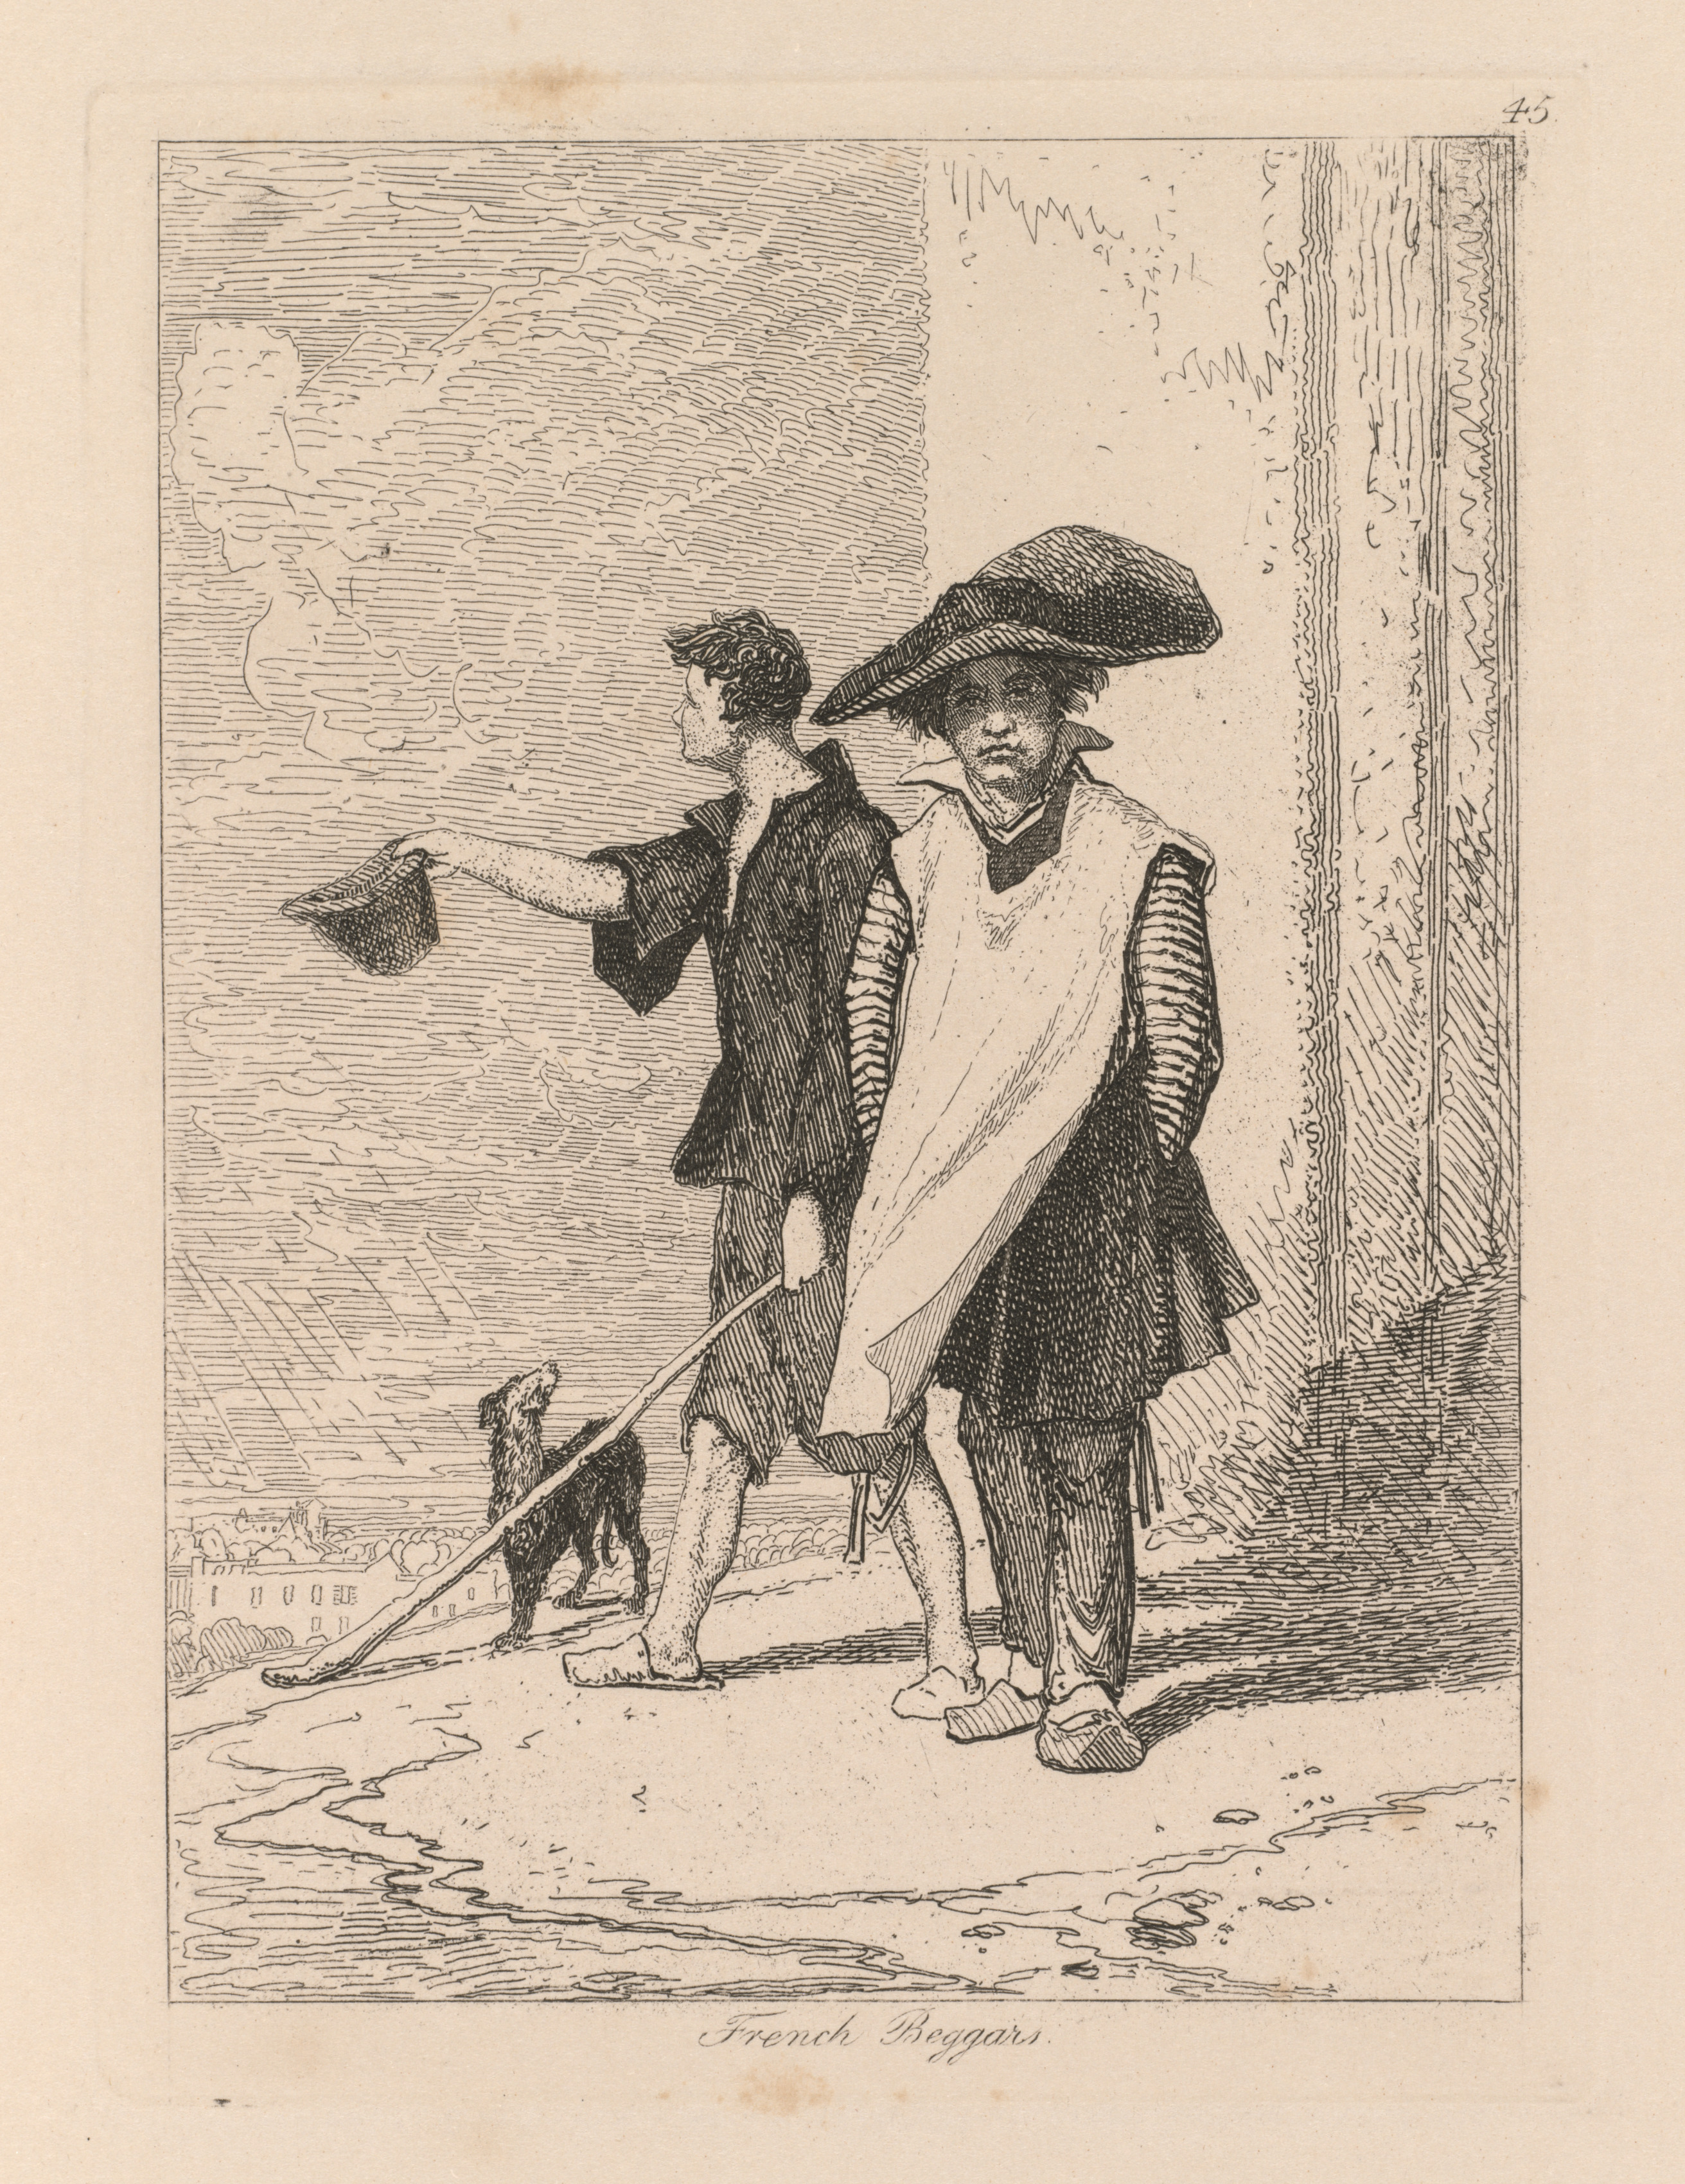 Liber Studiorum: Plate 45, French Beggars